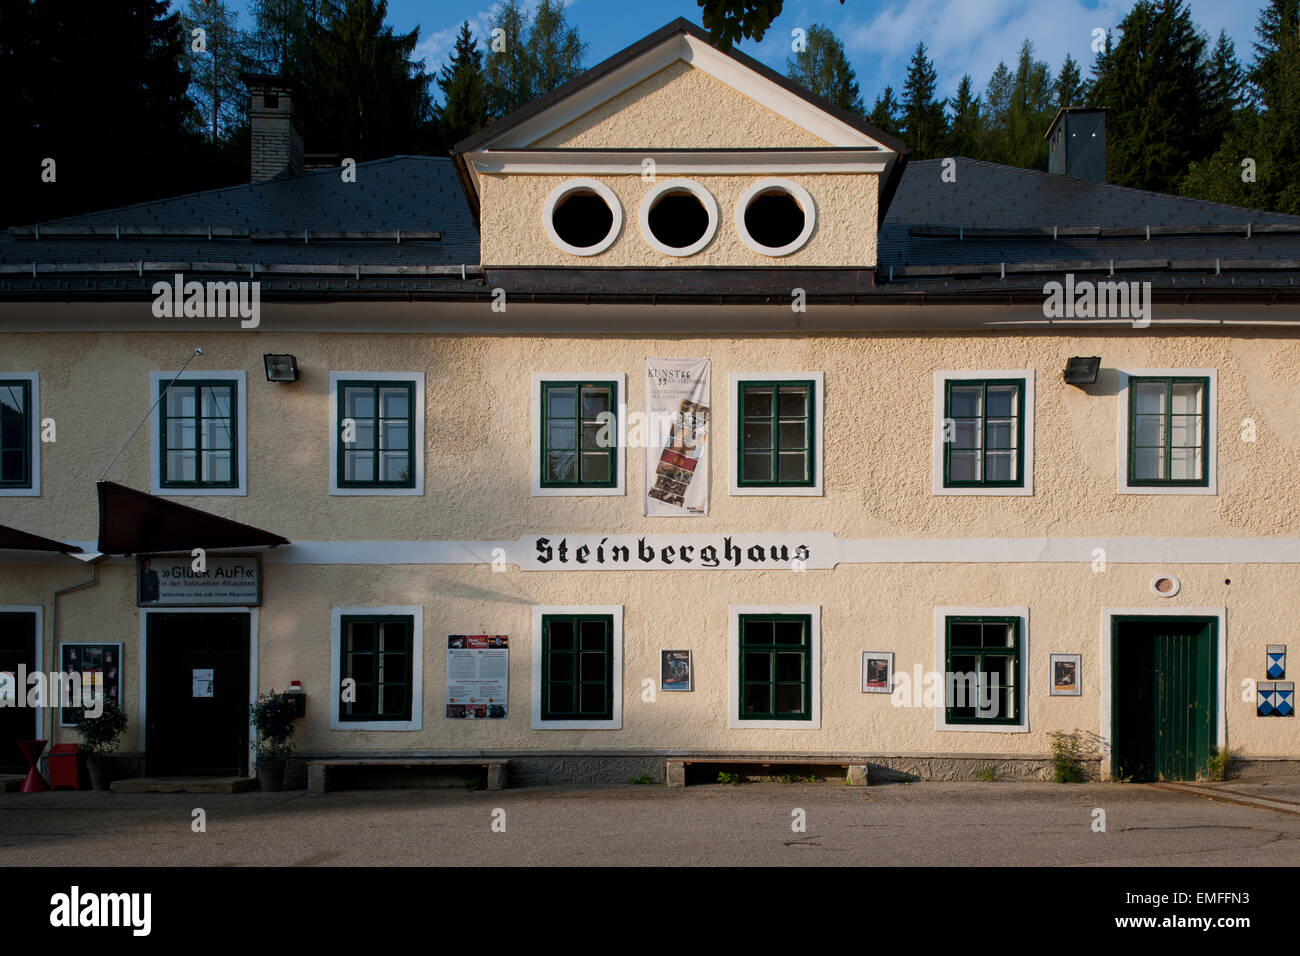 Steinberghaus suis Maidstone, Altaussee, Salzkammergut, Styrie, Autriche Banque D'Images